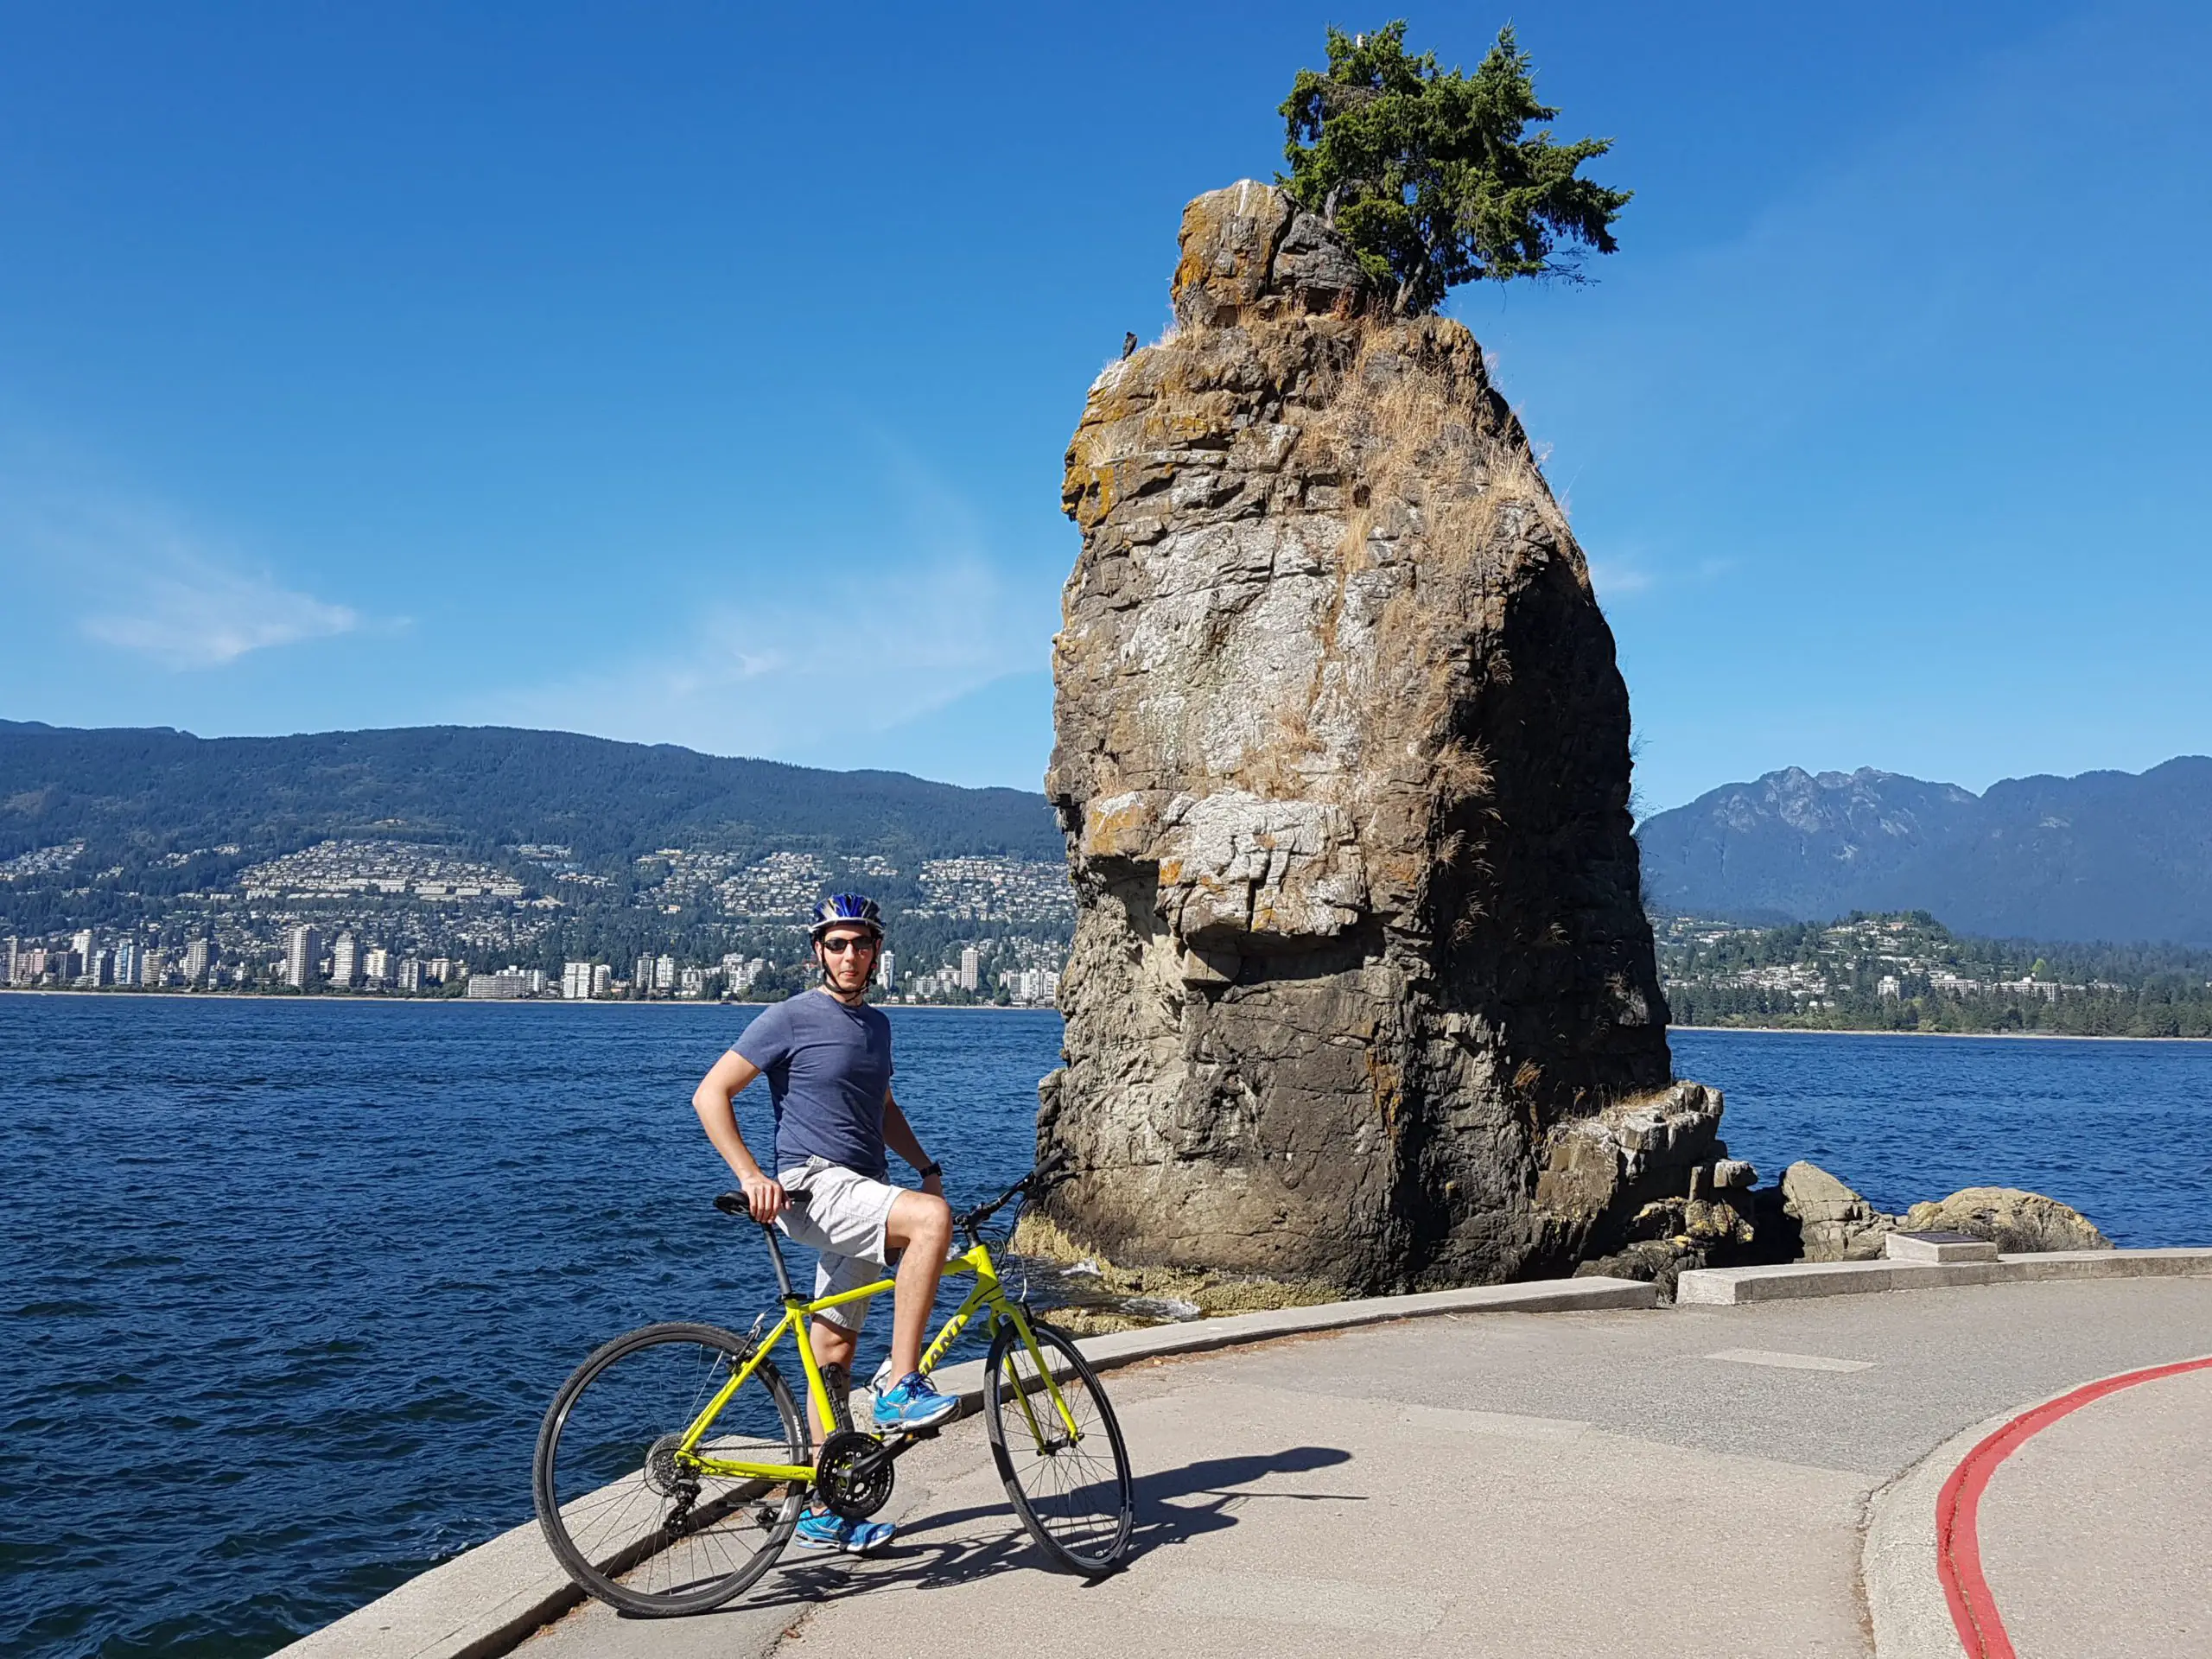 road trip vancouver to banff
bike ride around bay 